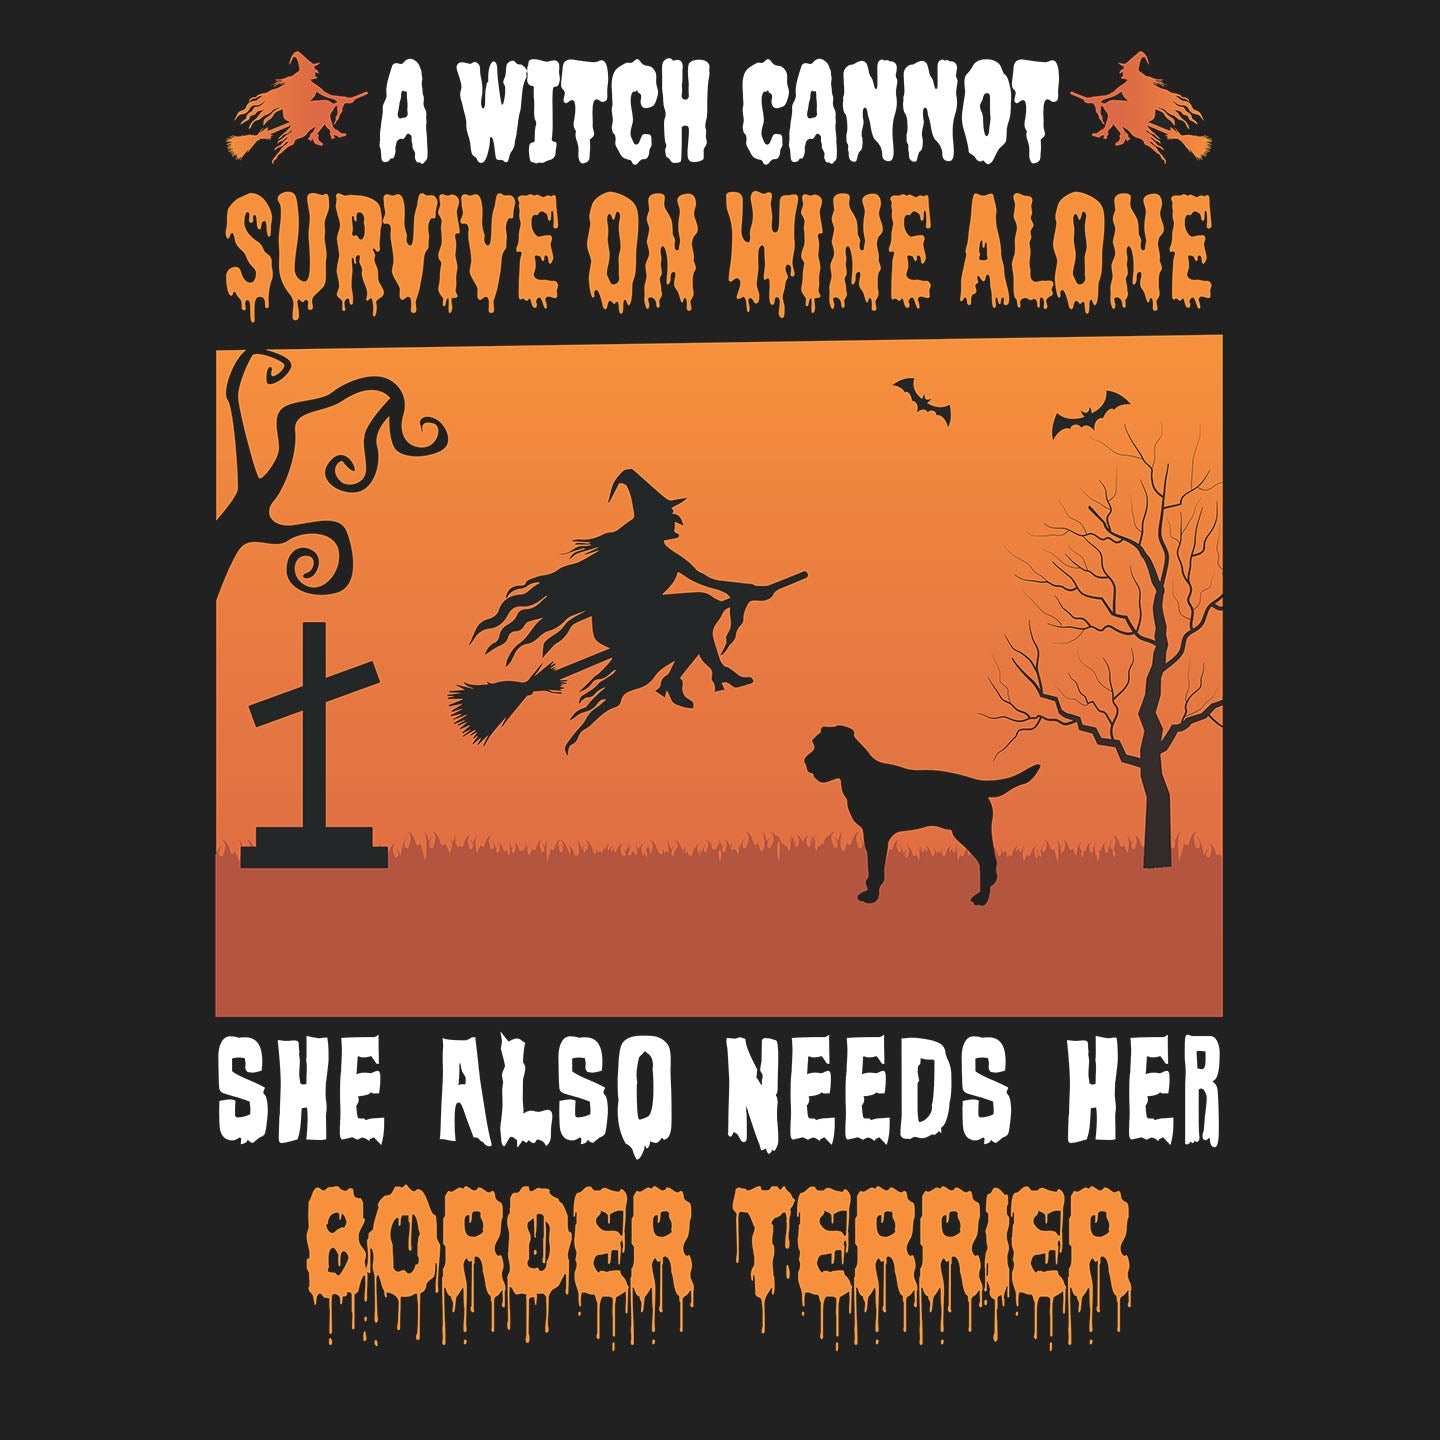 A Witch Needs Her Border Terrier - Adult Unisex Crewneck Sweatshirt